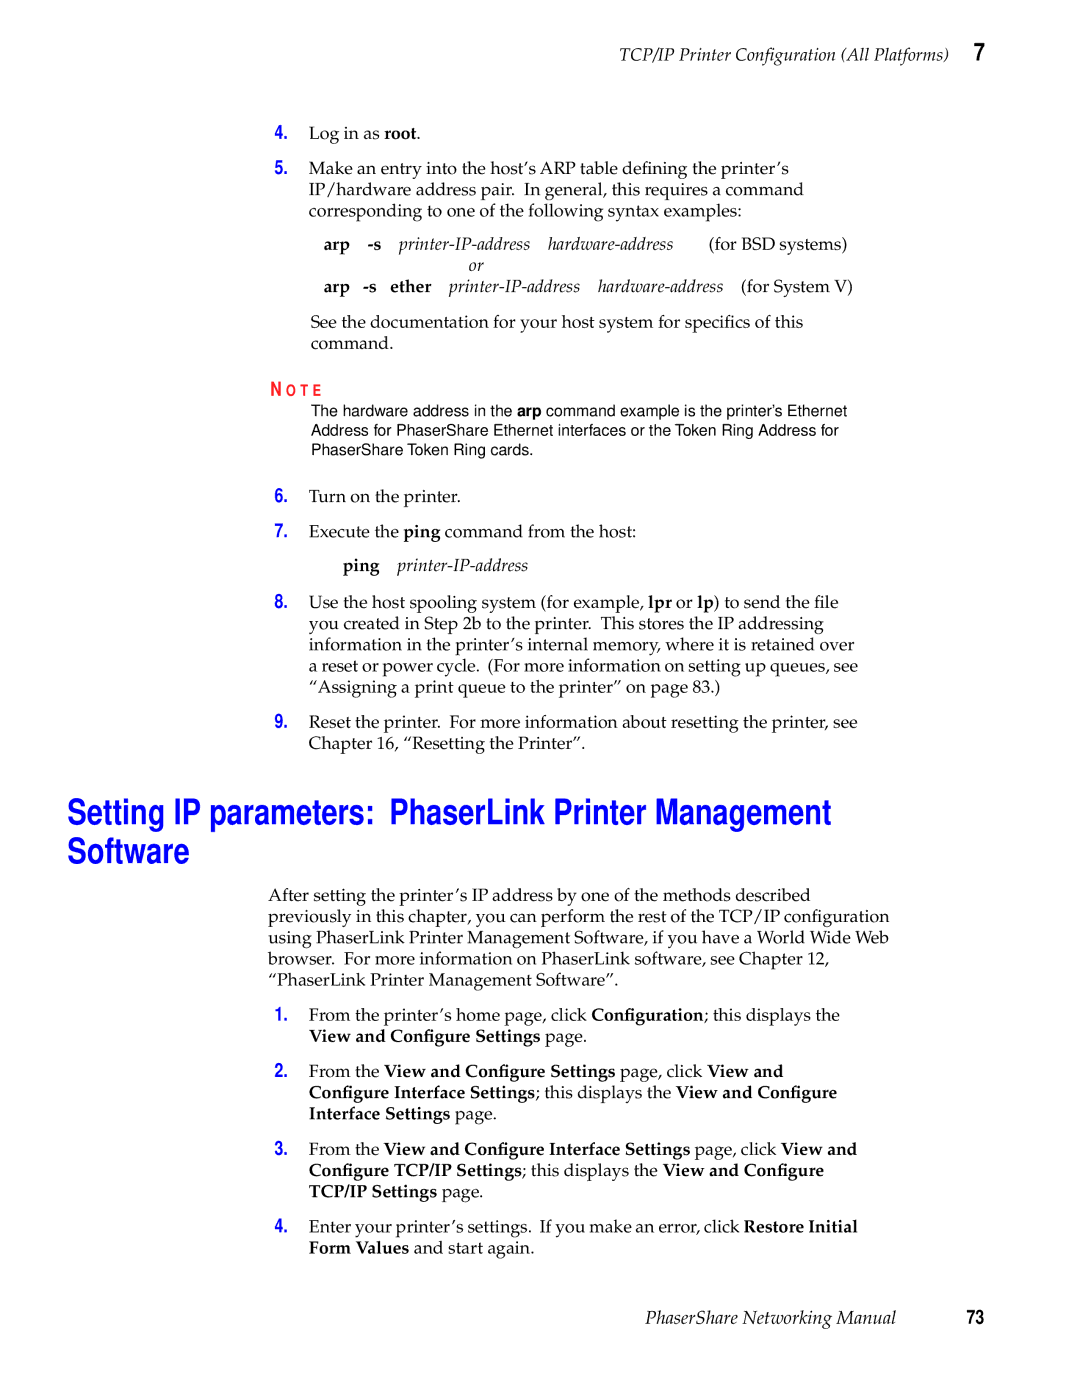 Xerox 780, 840, 360 manual Setting IP parameters PhaserLink Printer Management Software 